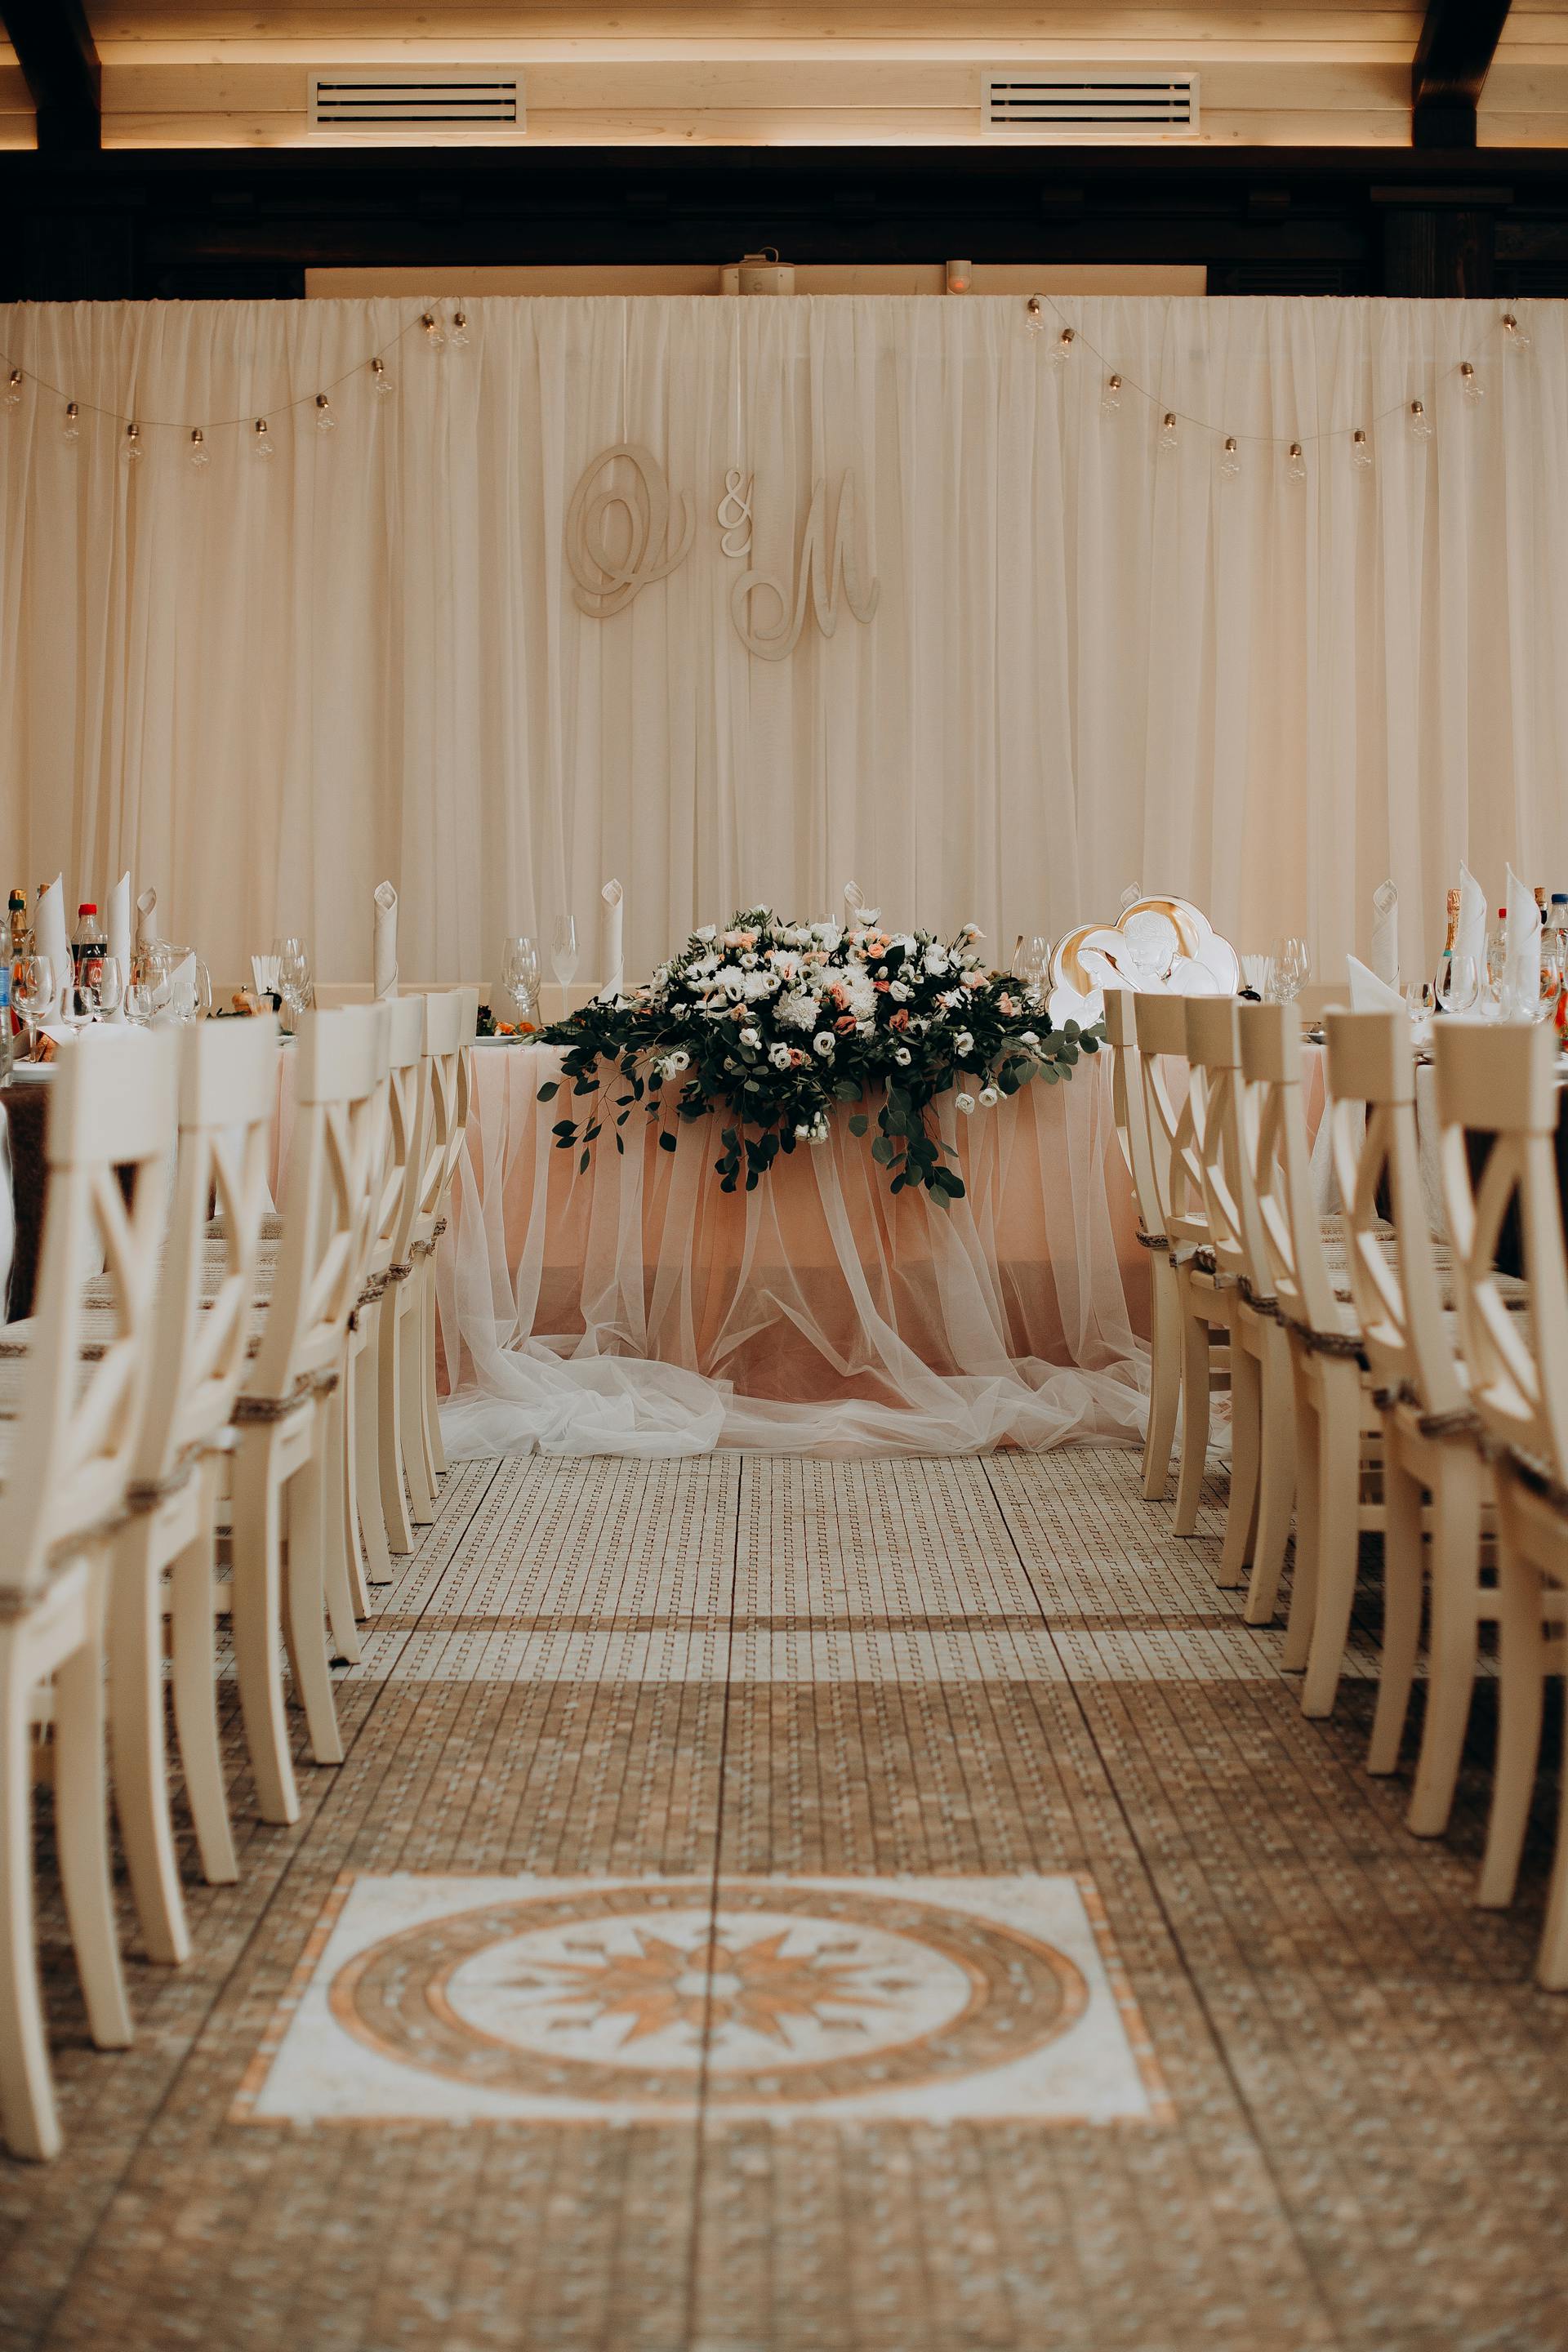 A wedding hall | Source: Pexels